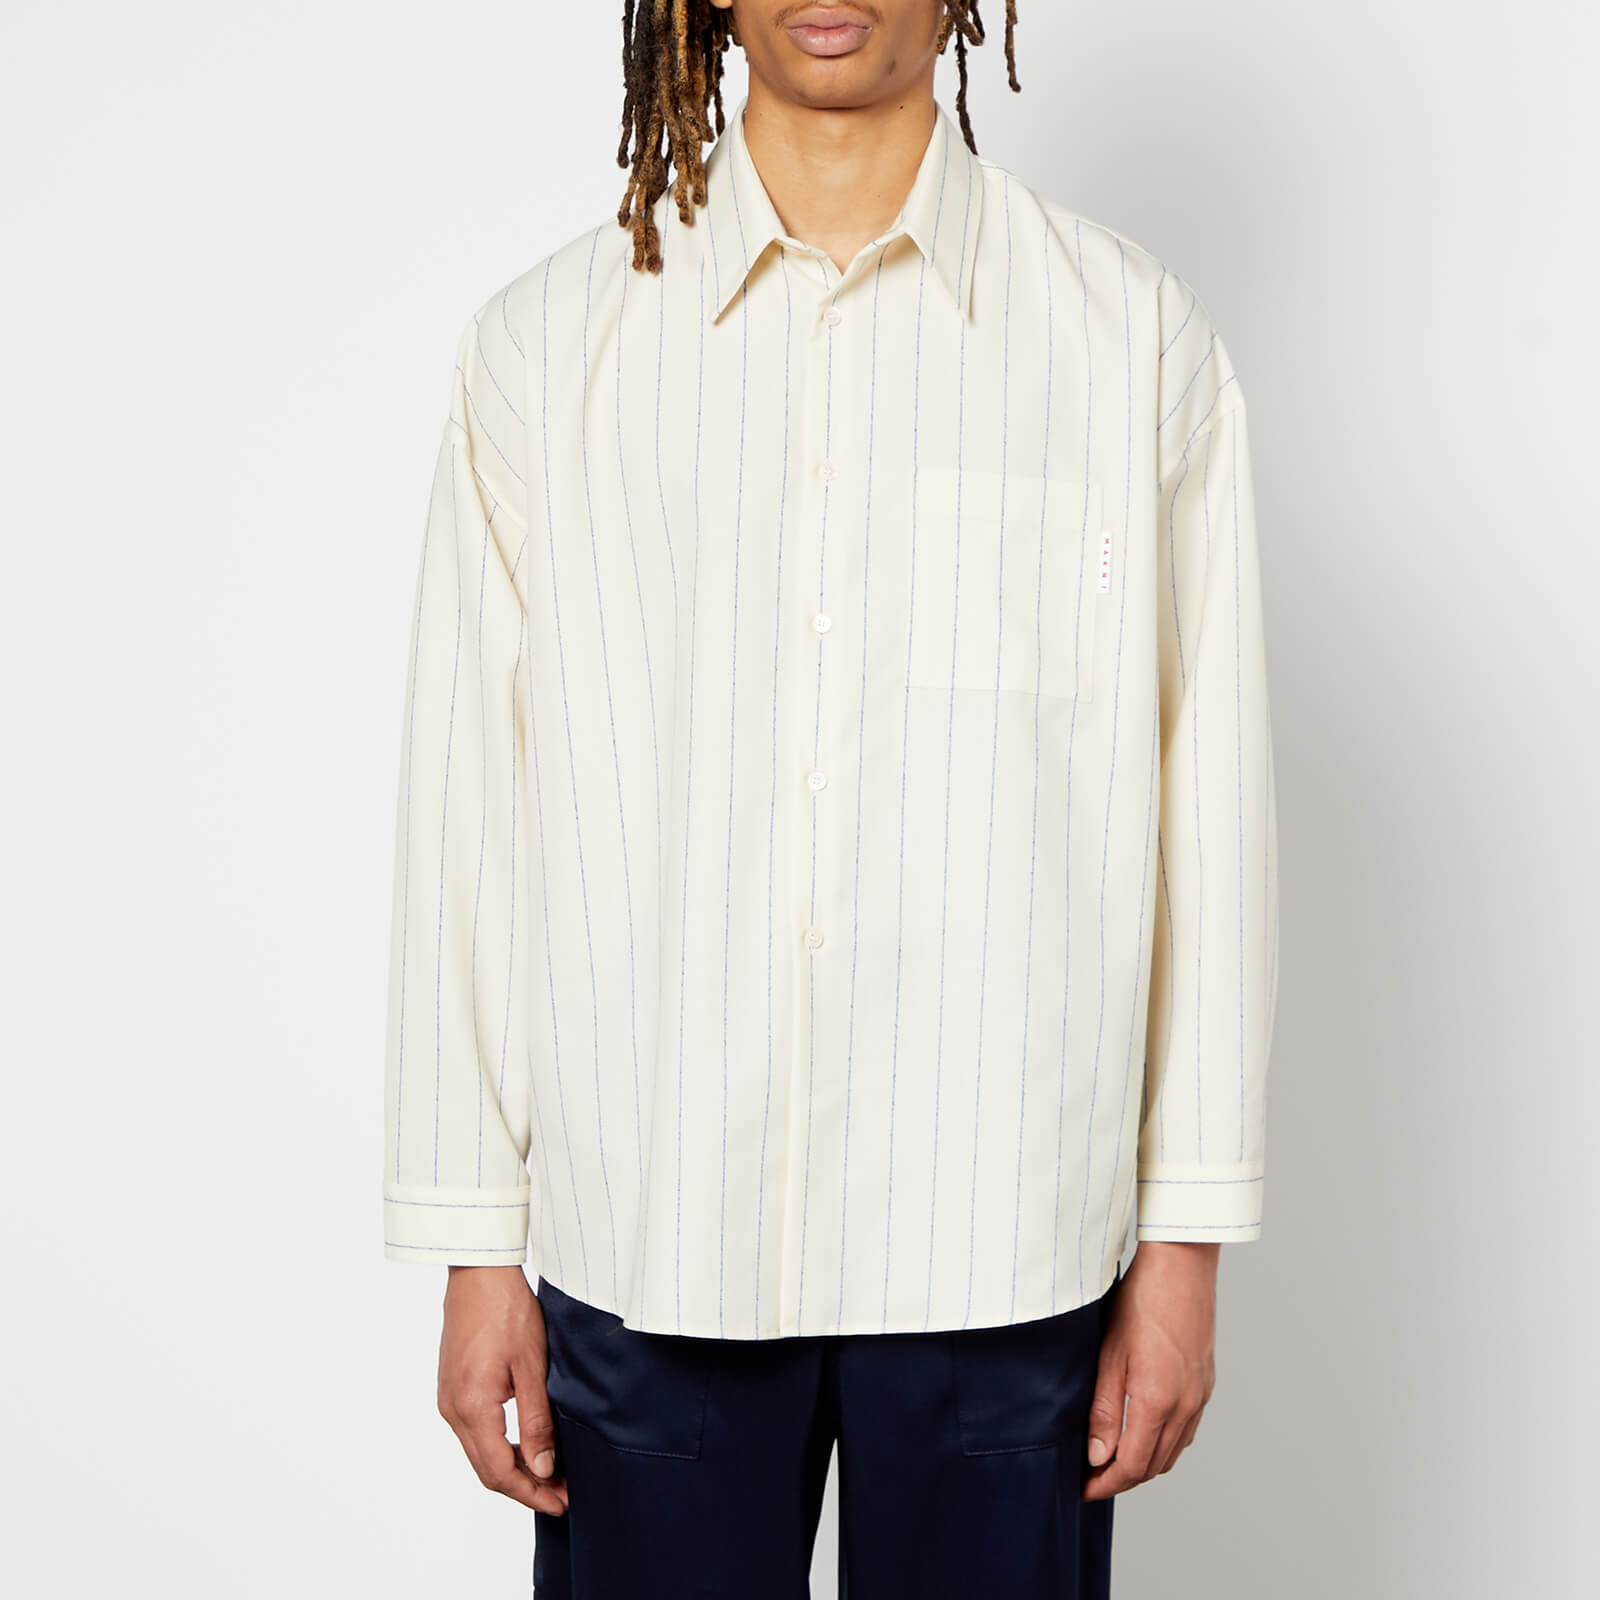 Marni Men's Pin Stripe Shirt - Ivory - IT 46/S